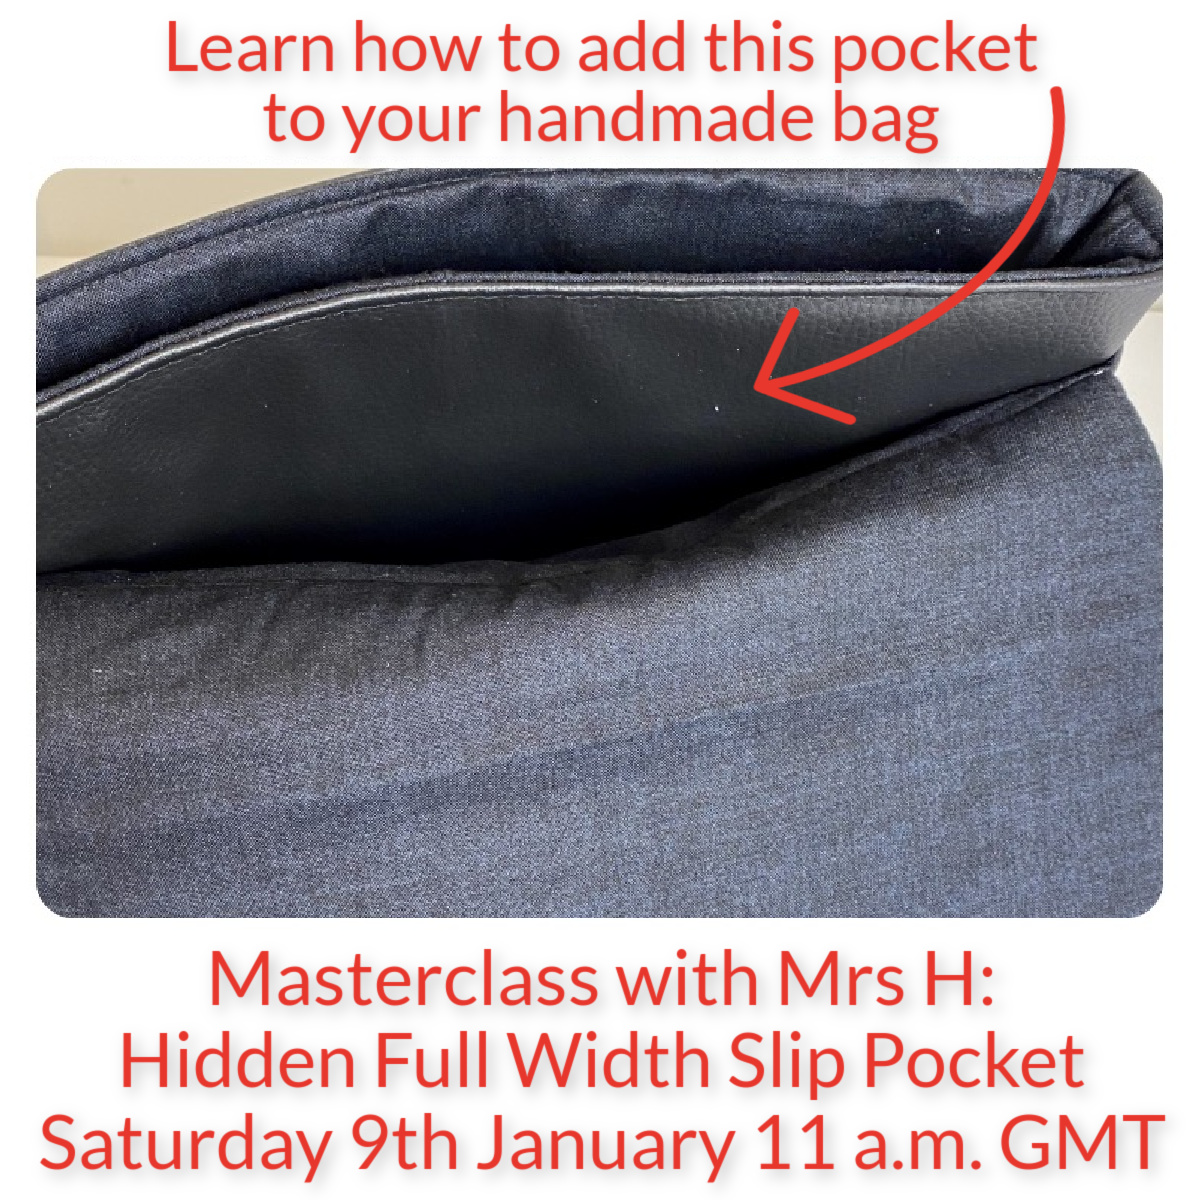 Blog - Masterclass with Mrs H: How to sew a hidden full width slip